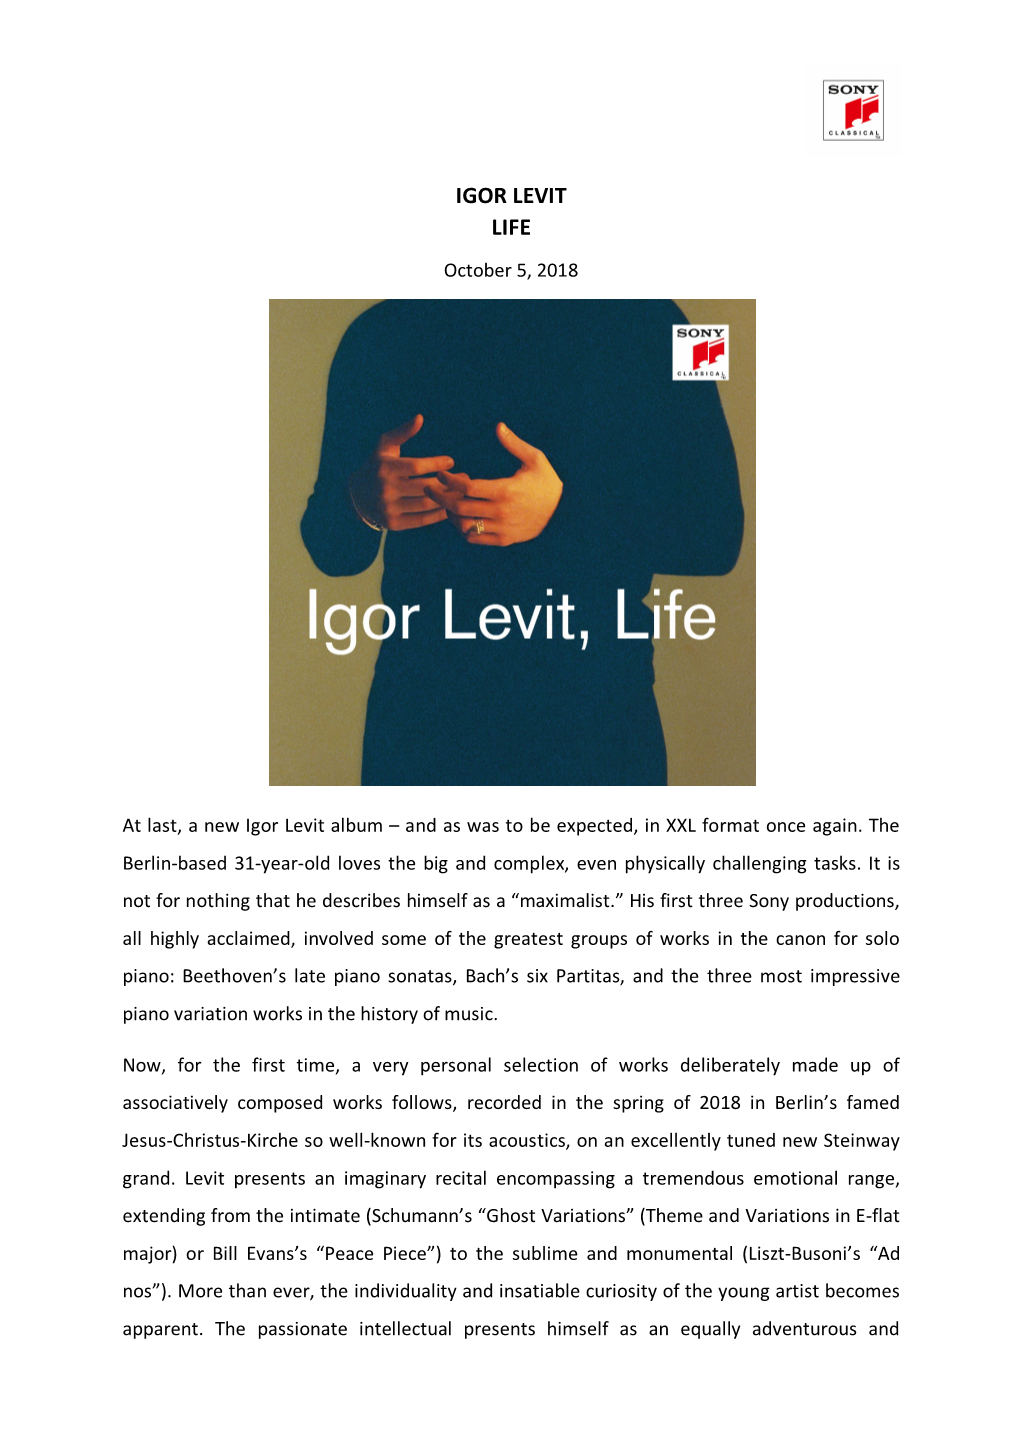 IGOR LEVIT LIFE October 5, 2018